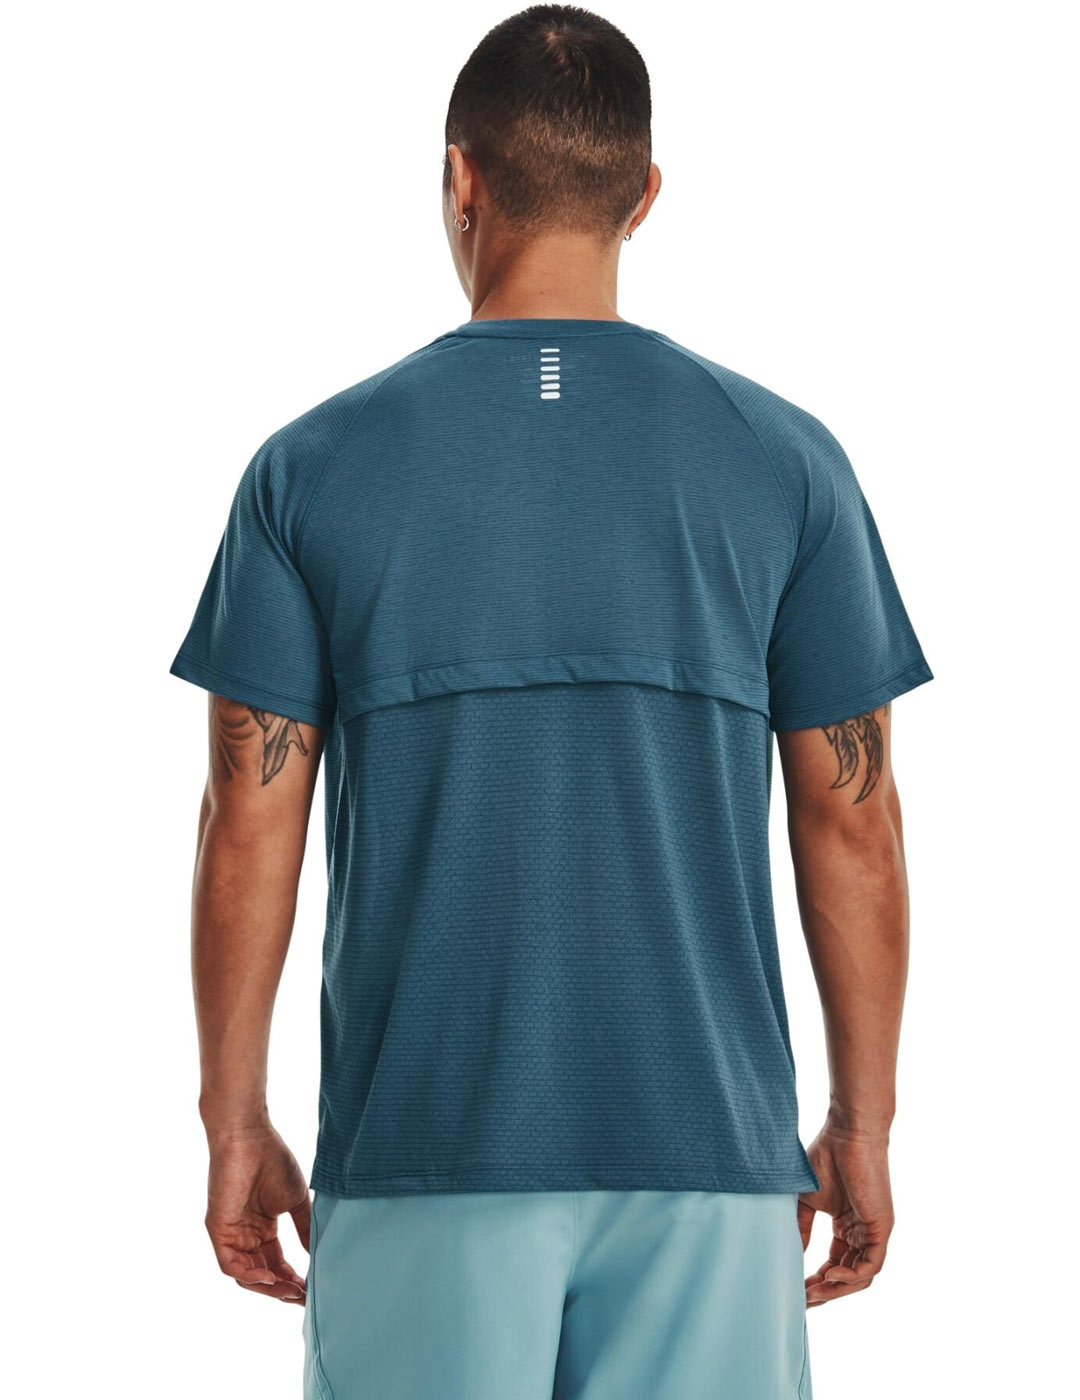 camiseta tecnica  manga corta under armour hombre UA STREAKER azul